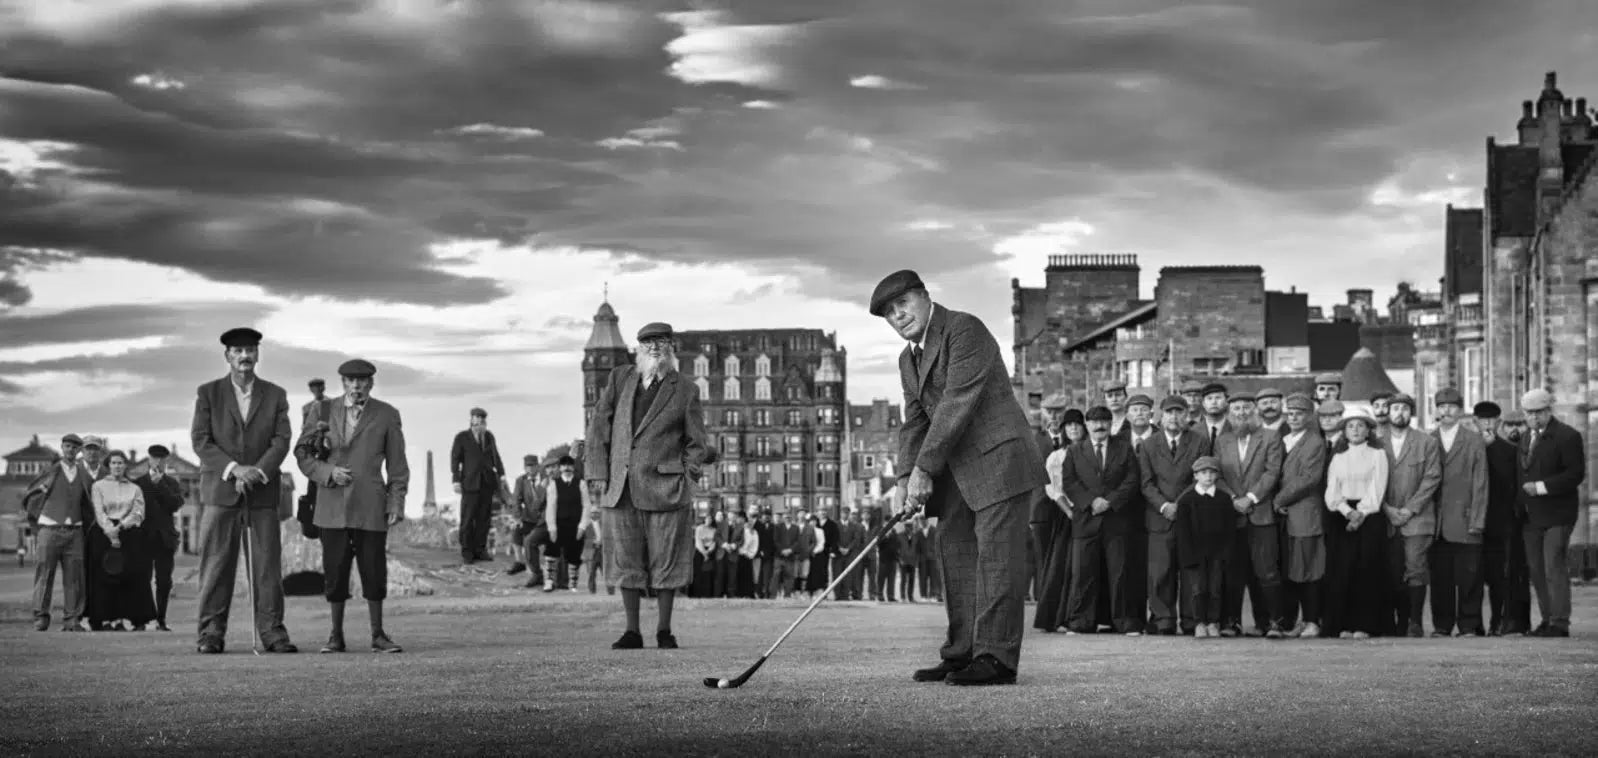 The Home of Golf-Photographic Print-David Yarrow-Sorrel Sky Gallery